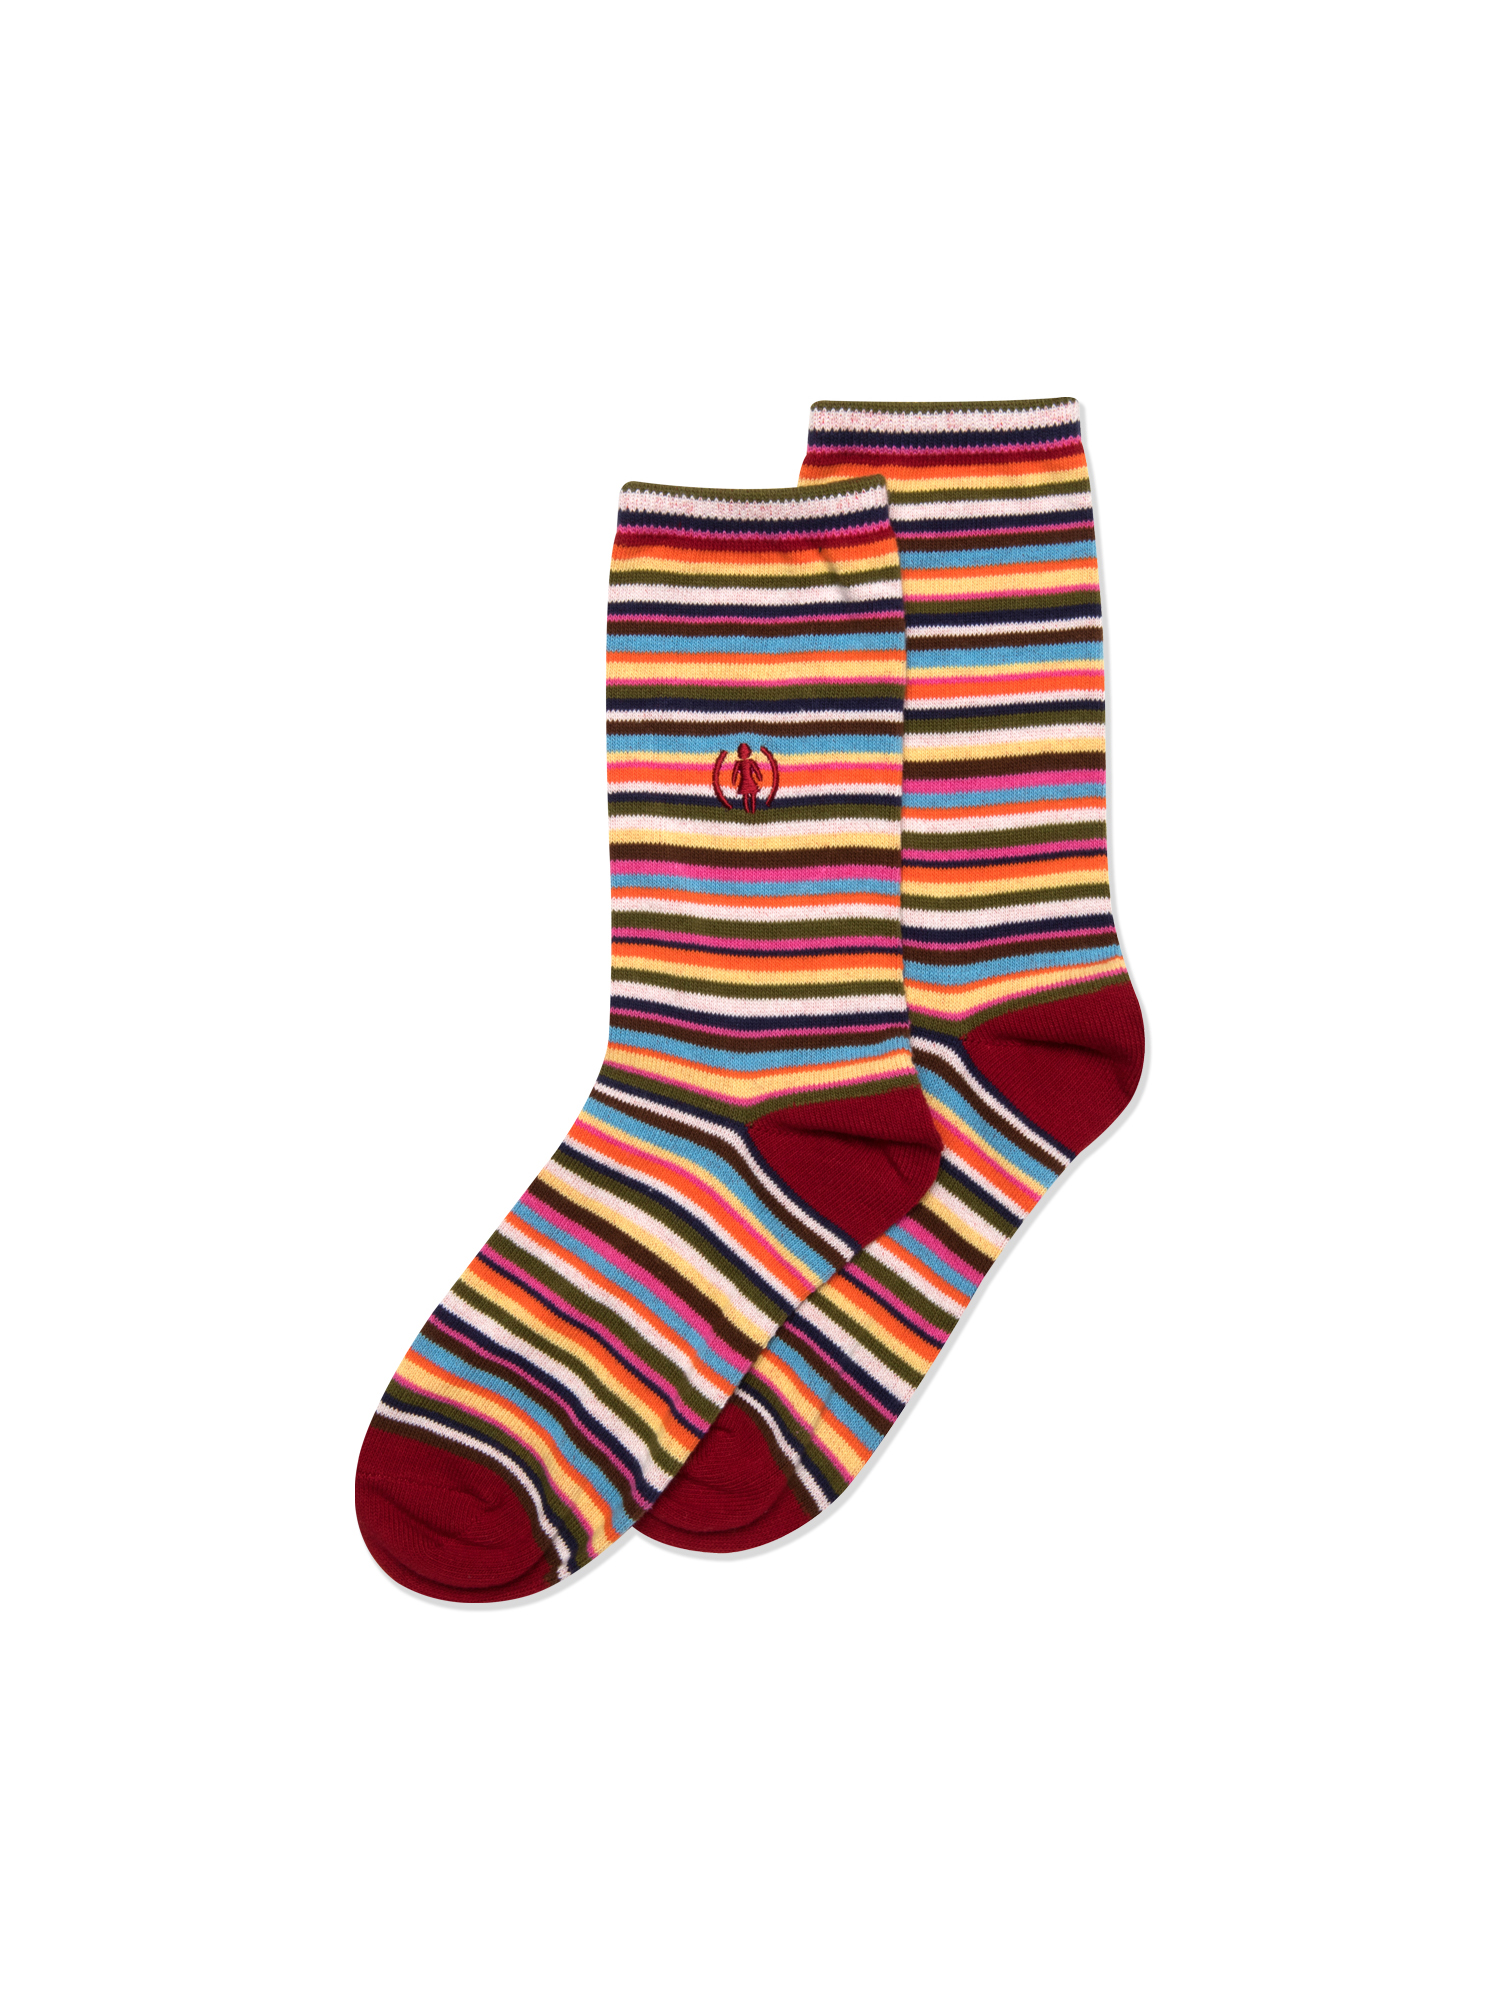 Tuesday (Red) Socks - Stripe